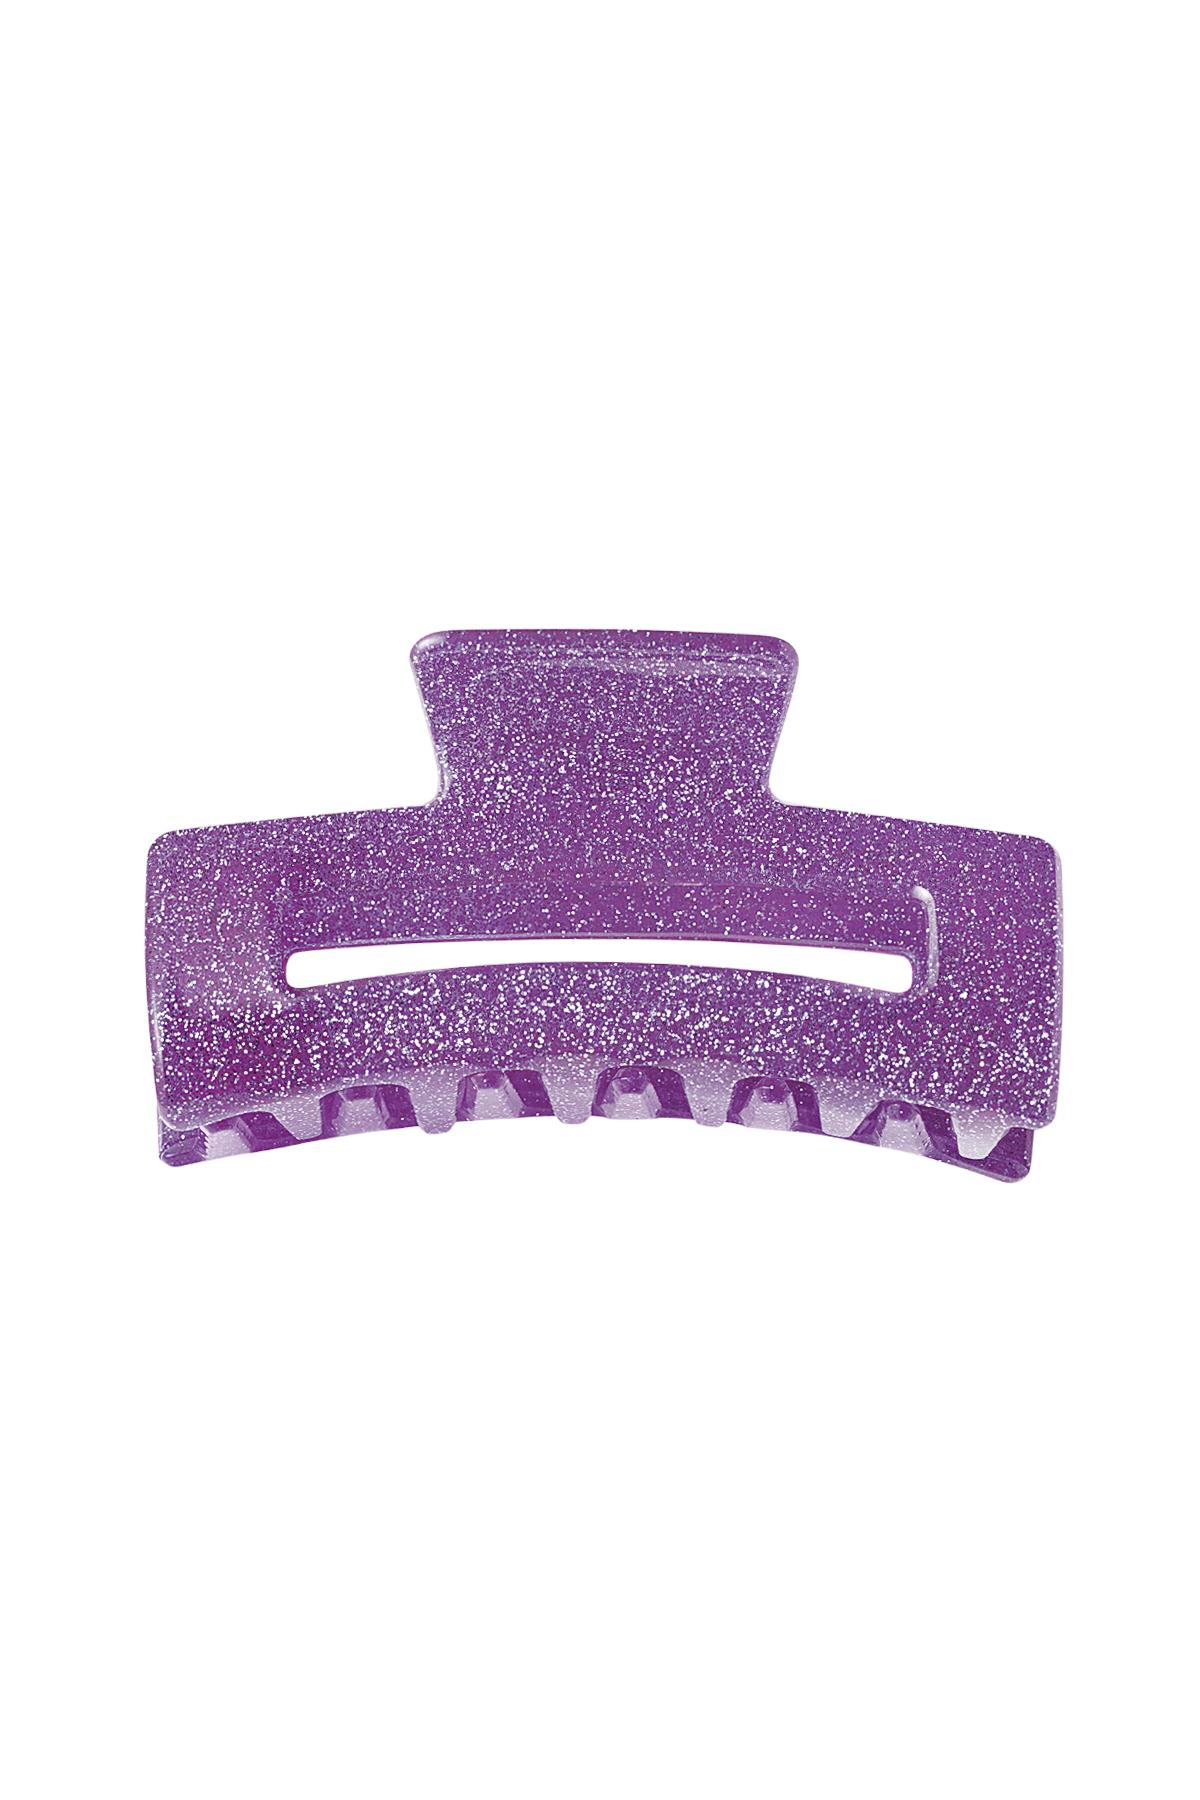 Saç tokası parıltısı Purple Sheet Material h5 